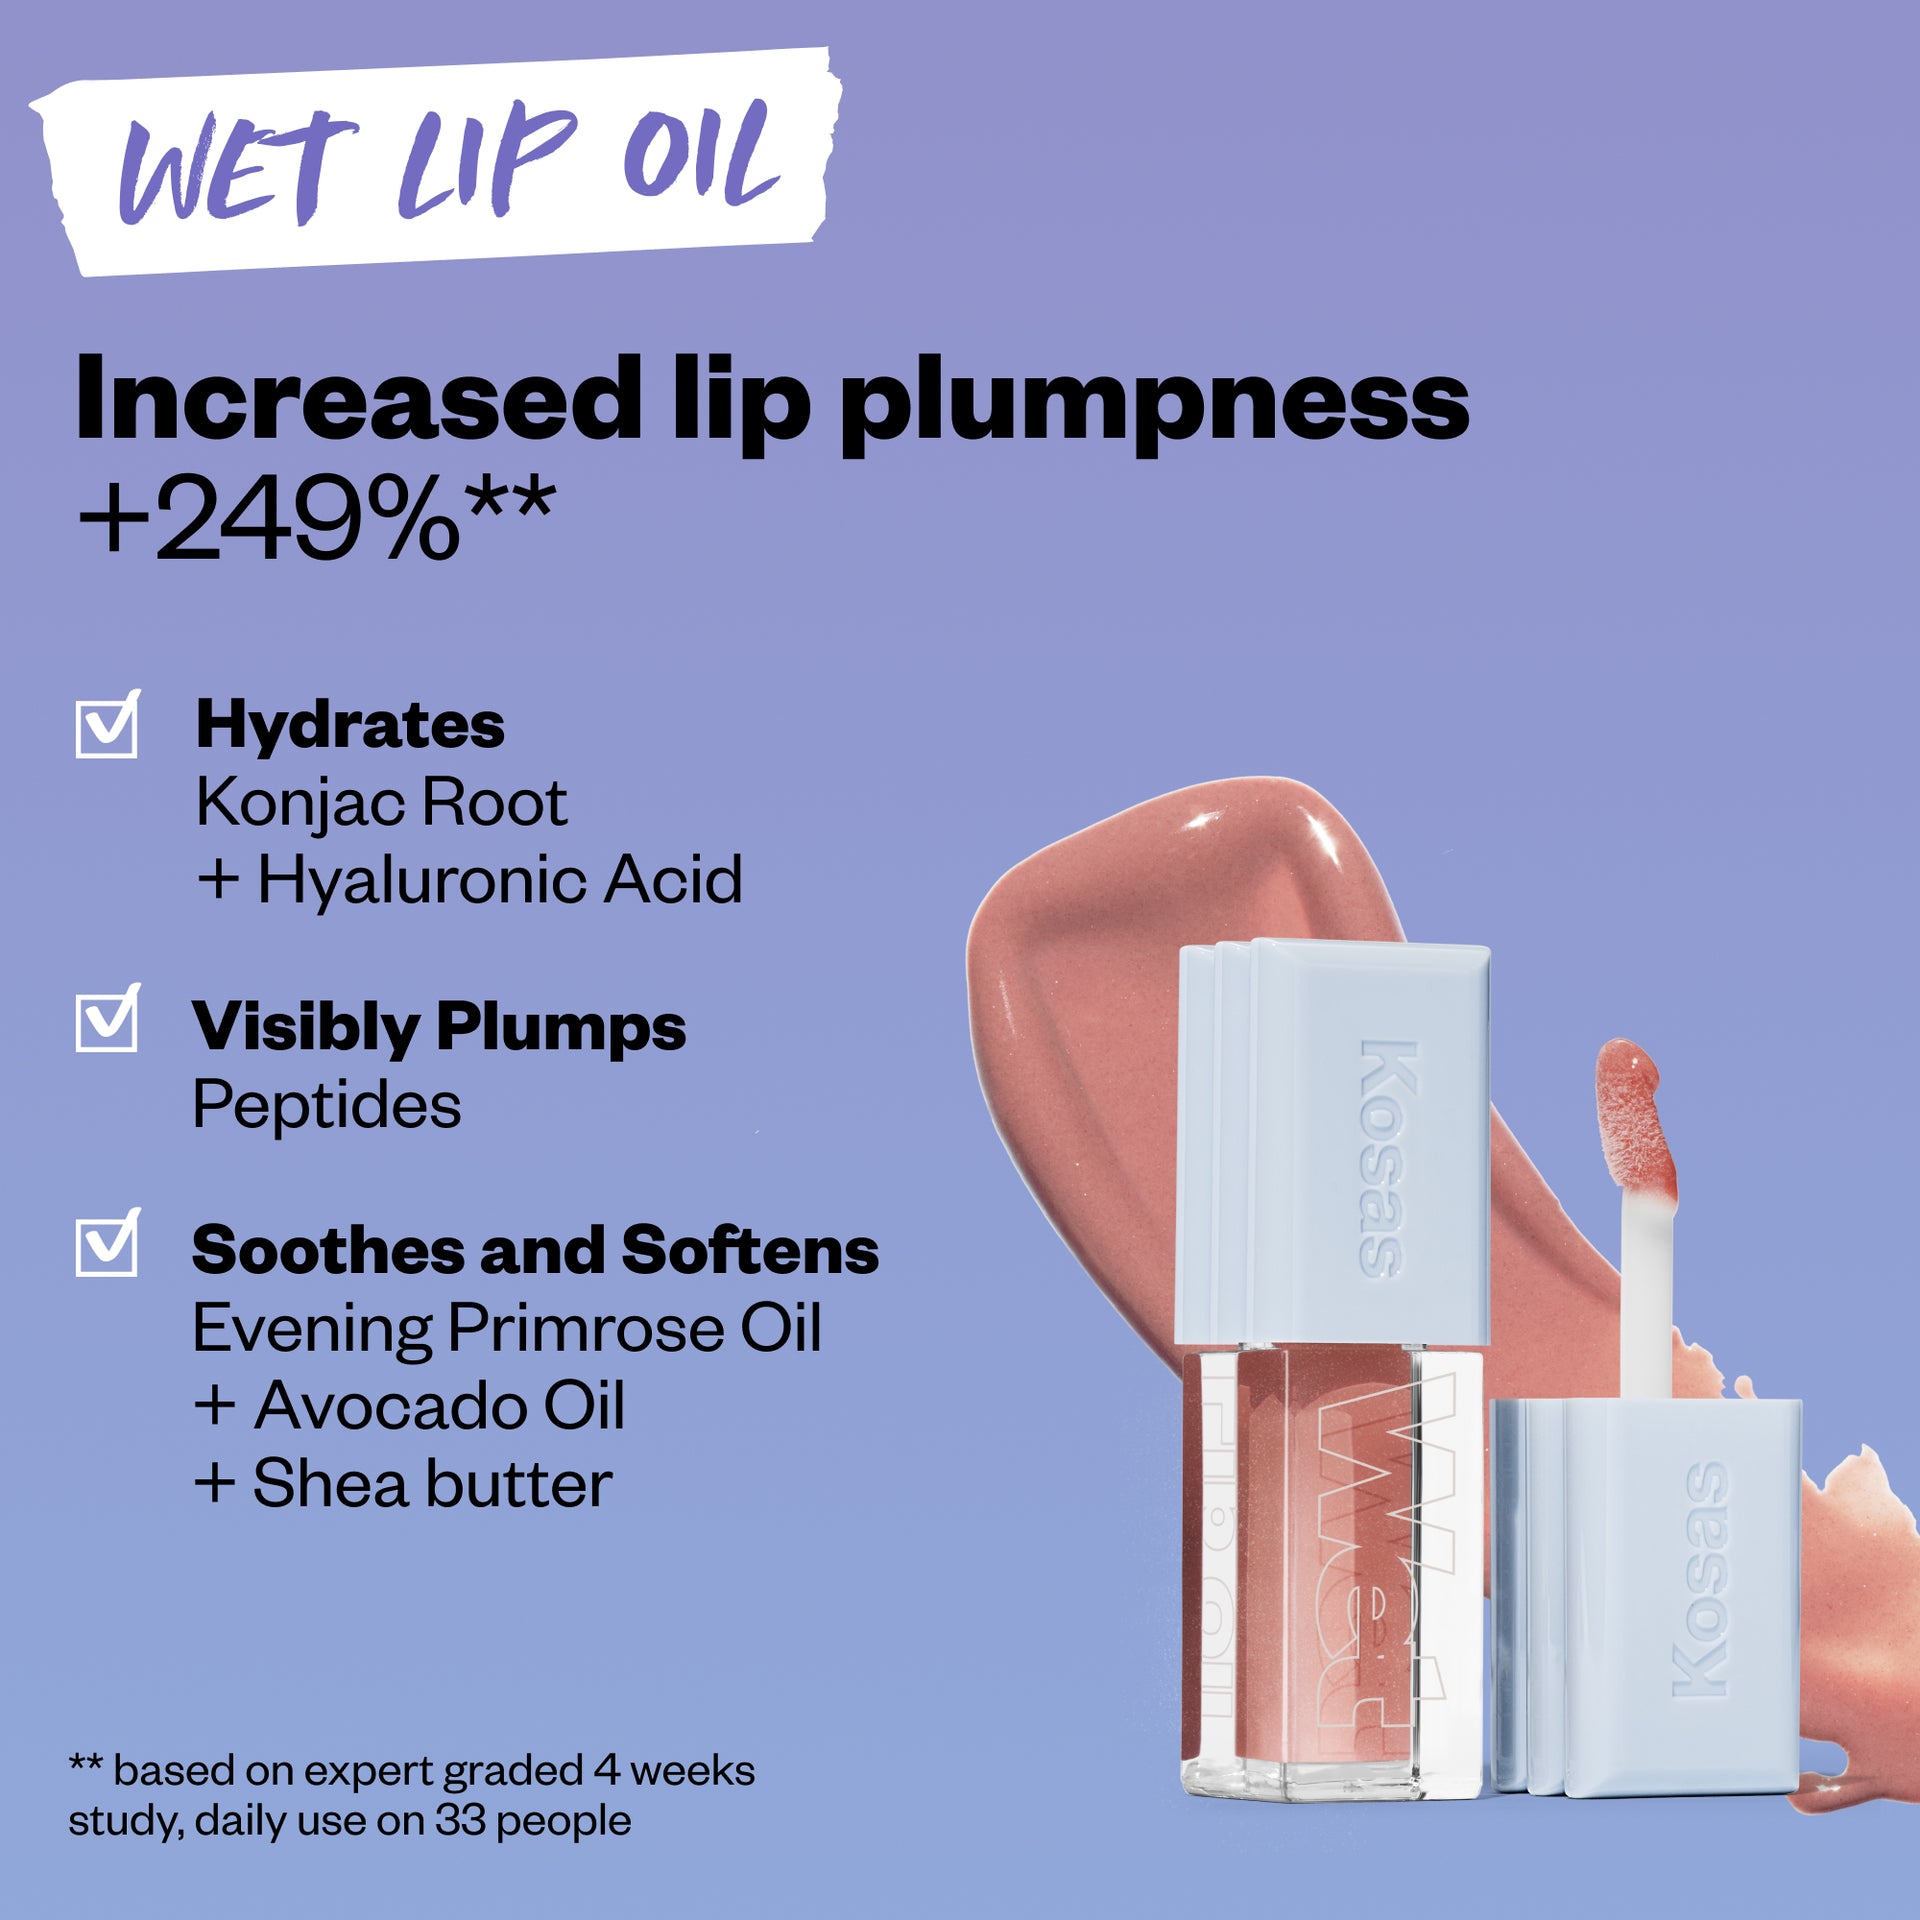 Wet lip oil ingredients and benefits